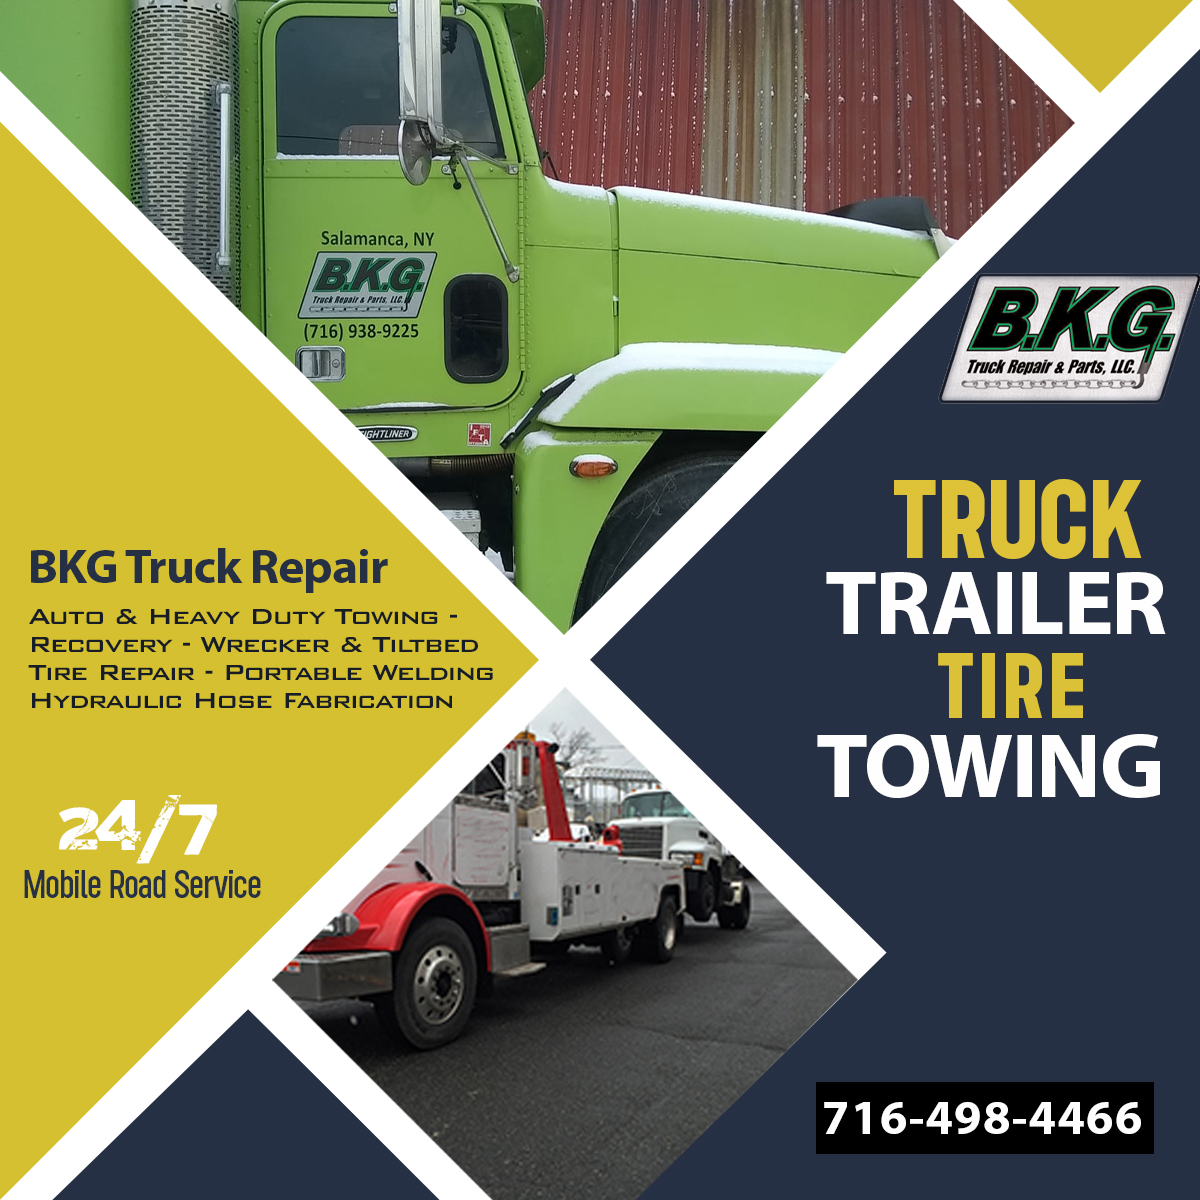 BKG Truck Repair and Parts LLC